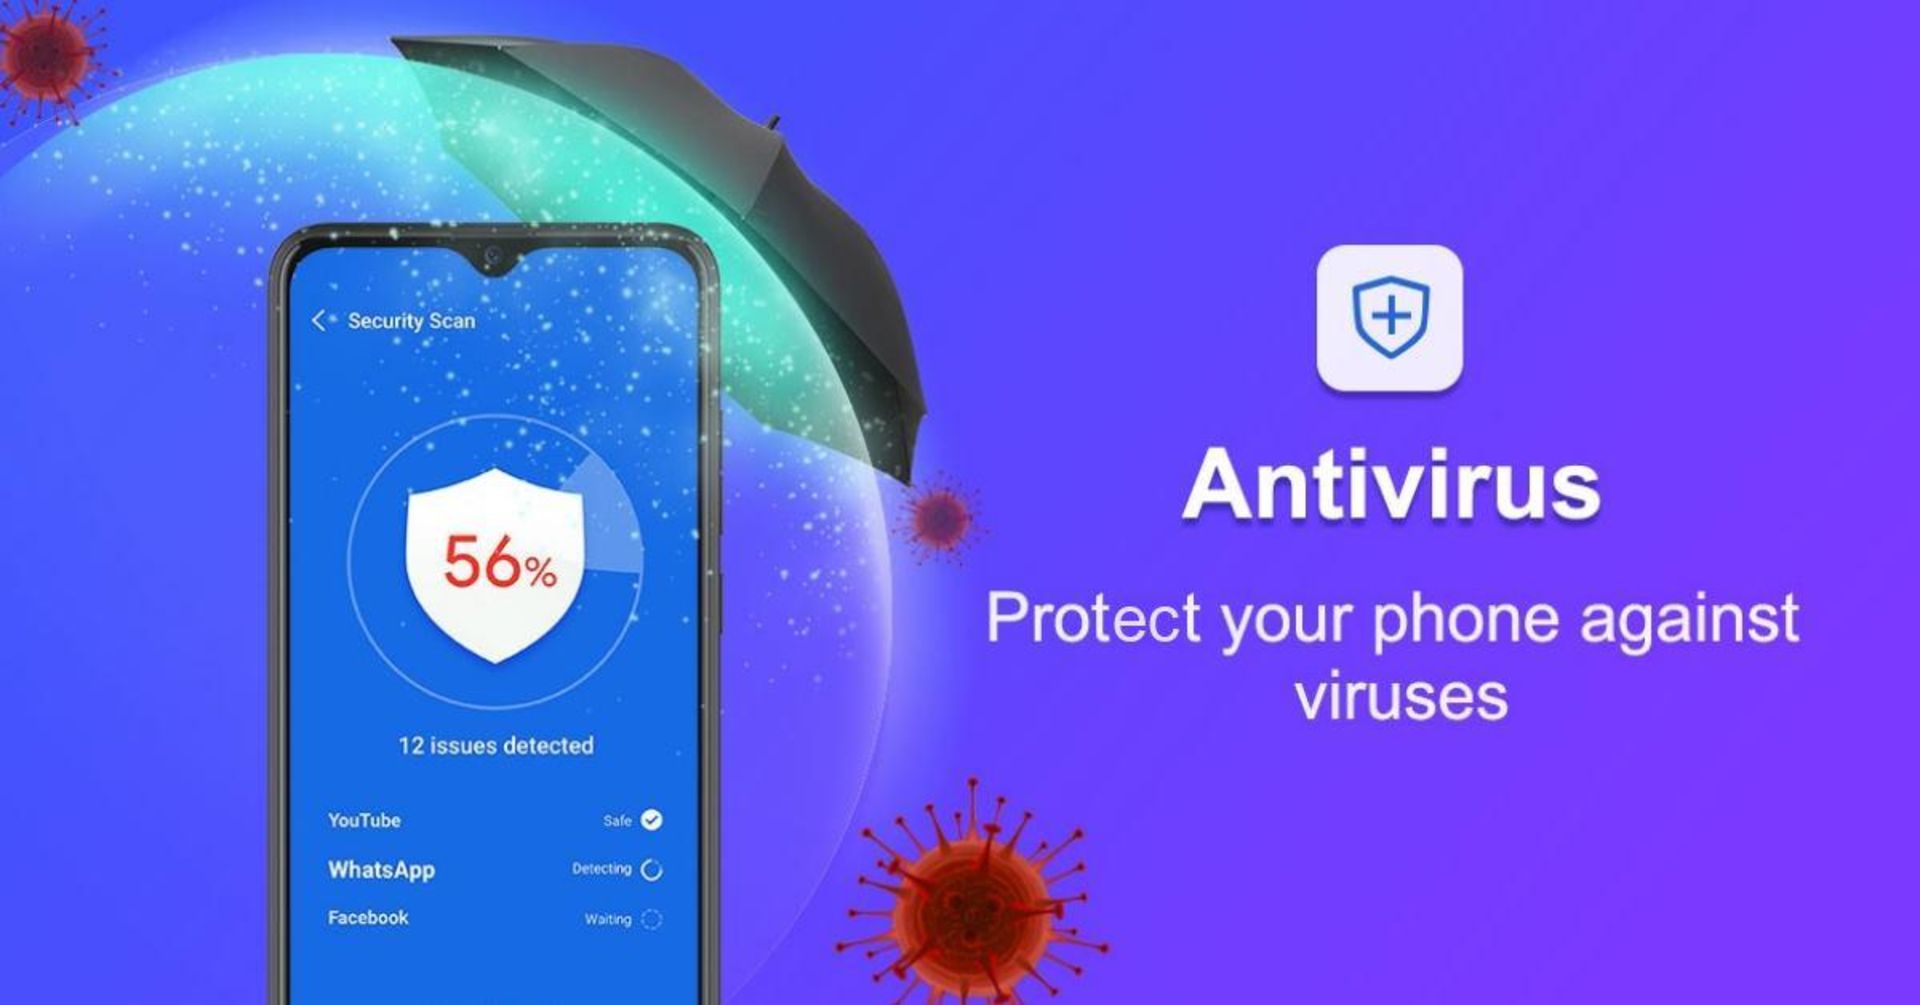 Antivirus on Android phone